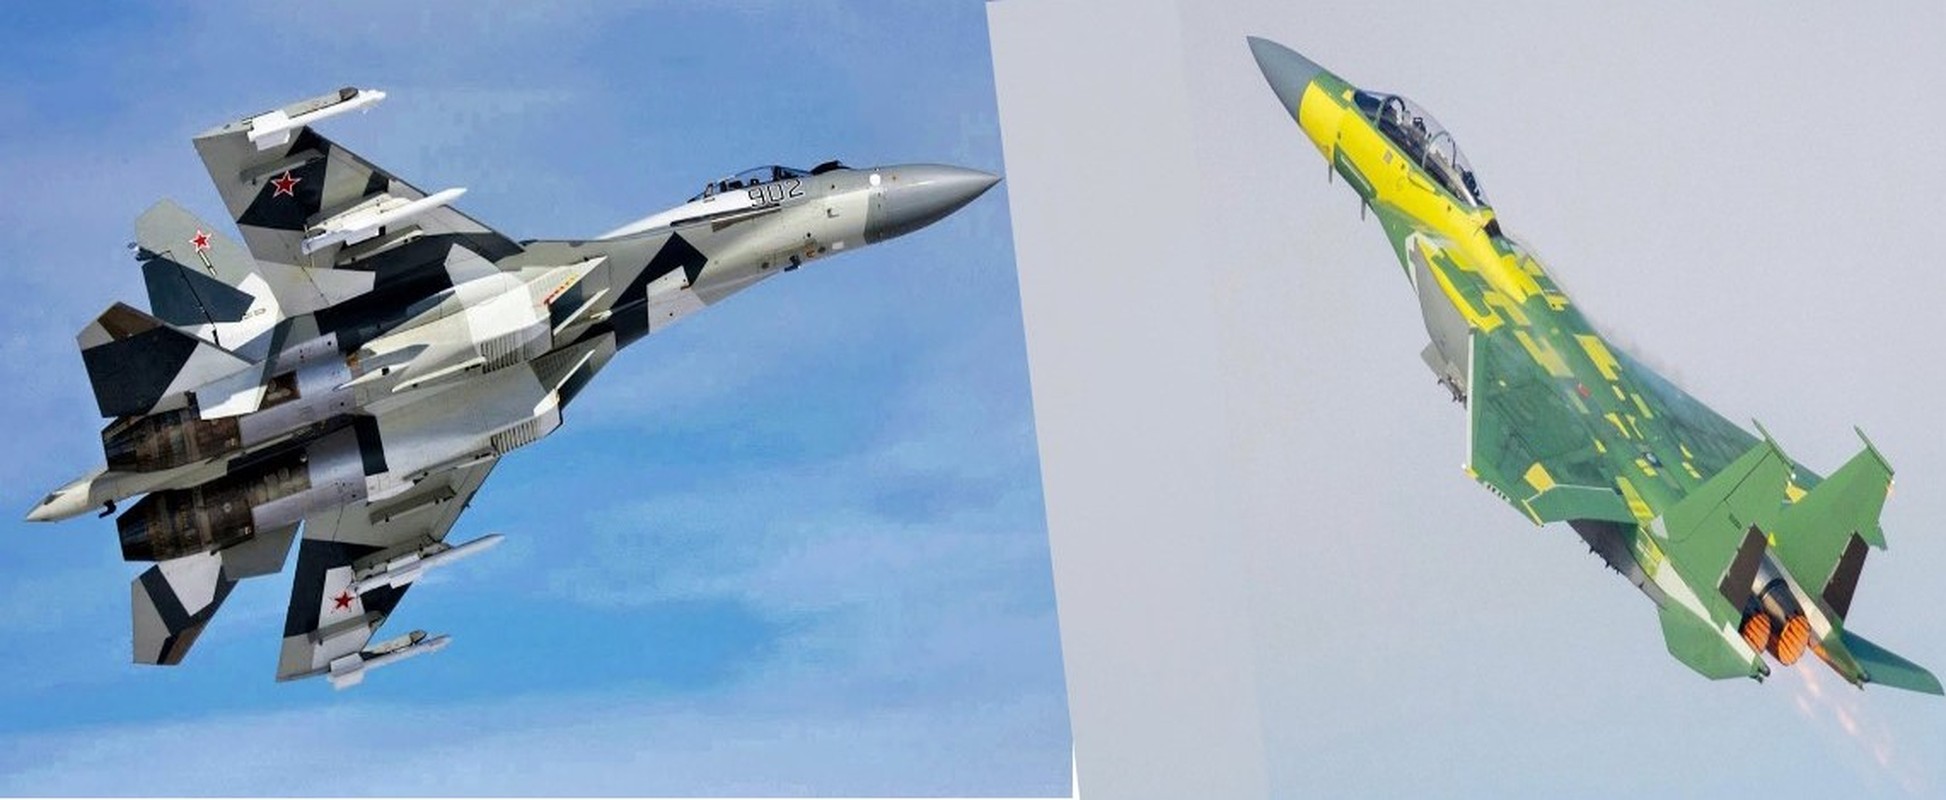 Su-35 cua Nga dau voi F-15EX cua My: Cuoc chien cua the he 4++-Hinh-16